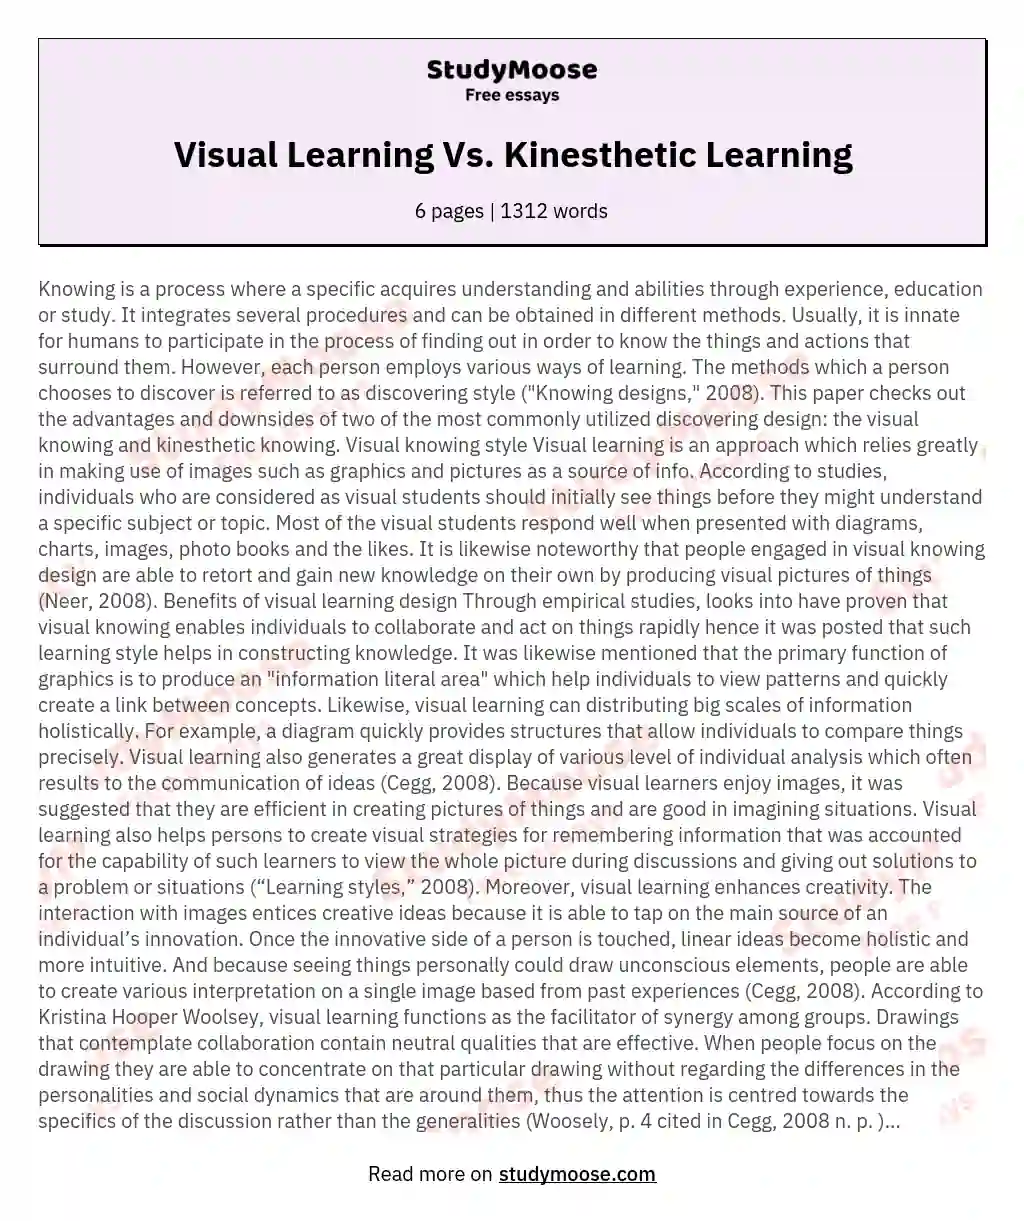 Visual Learning Vs. Kinesthetic Learning essay